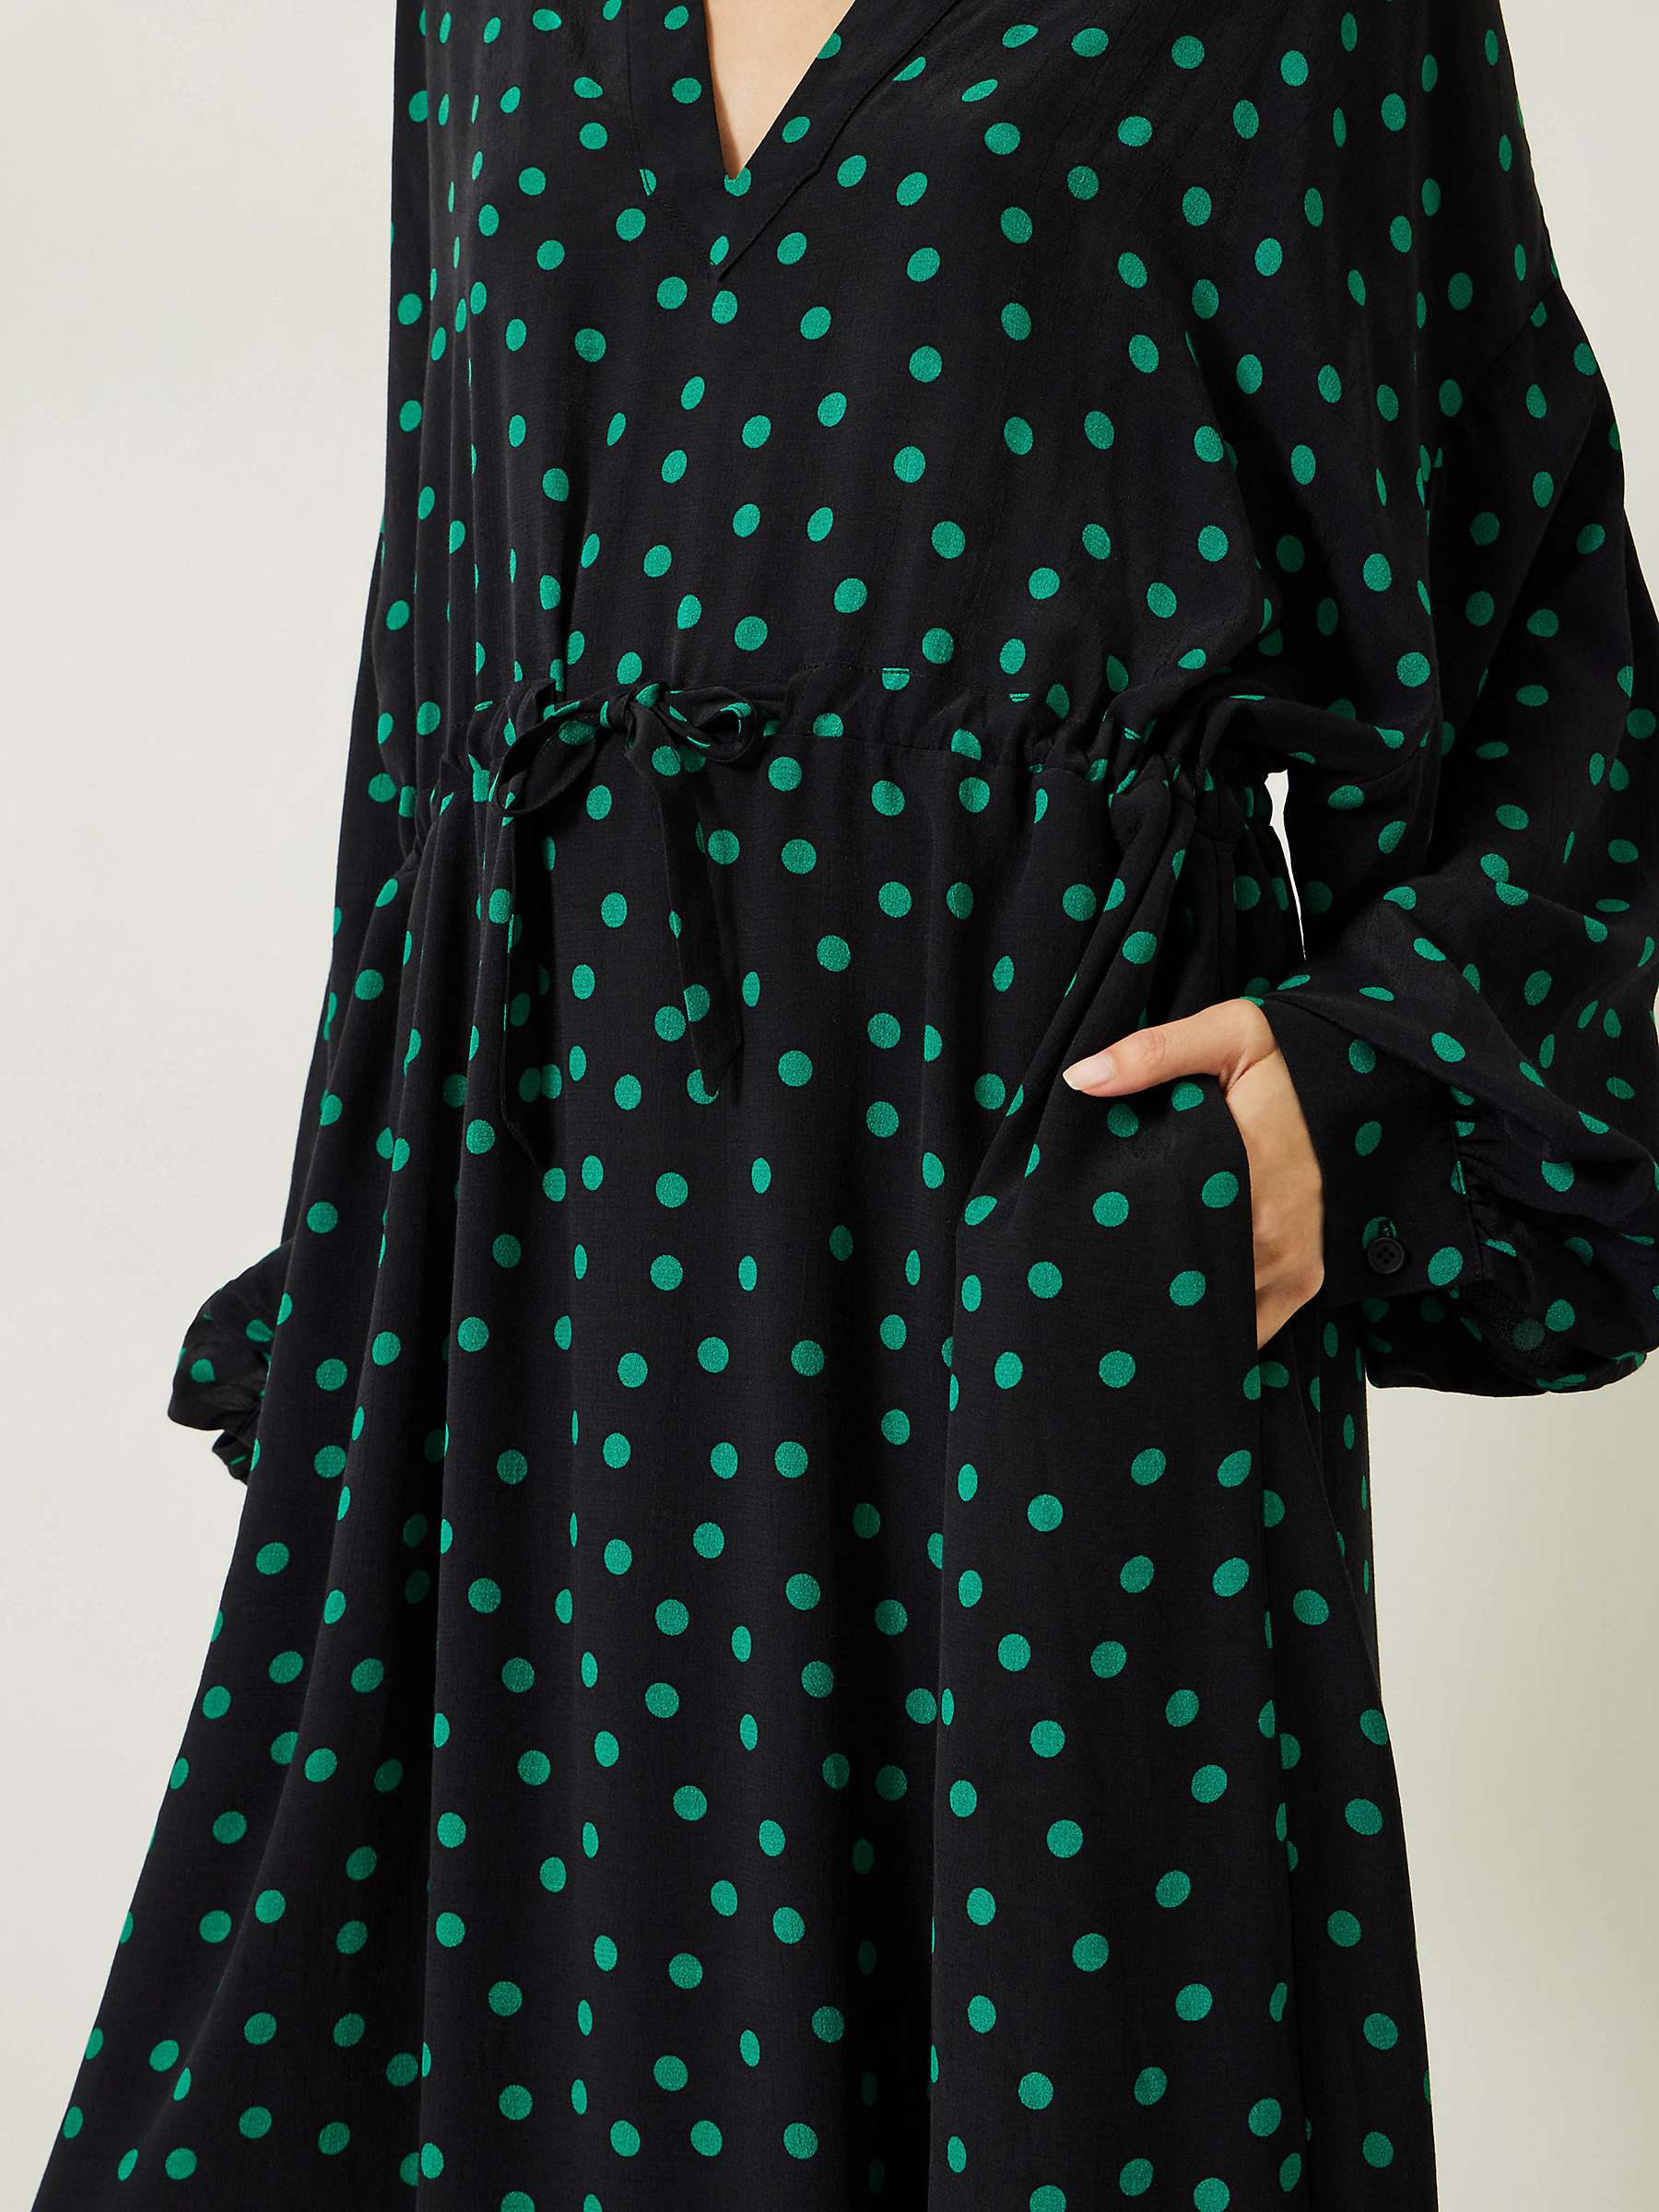 Buy HUSH Aimee Polka Dot Maxi Dress, Black/Green Online at johnlewis.com